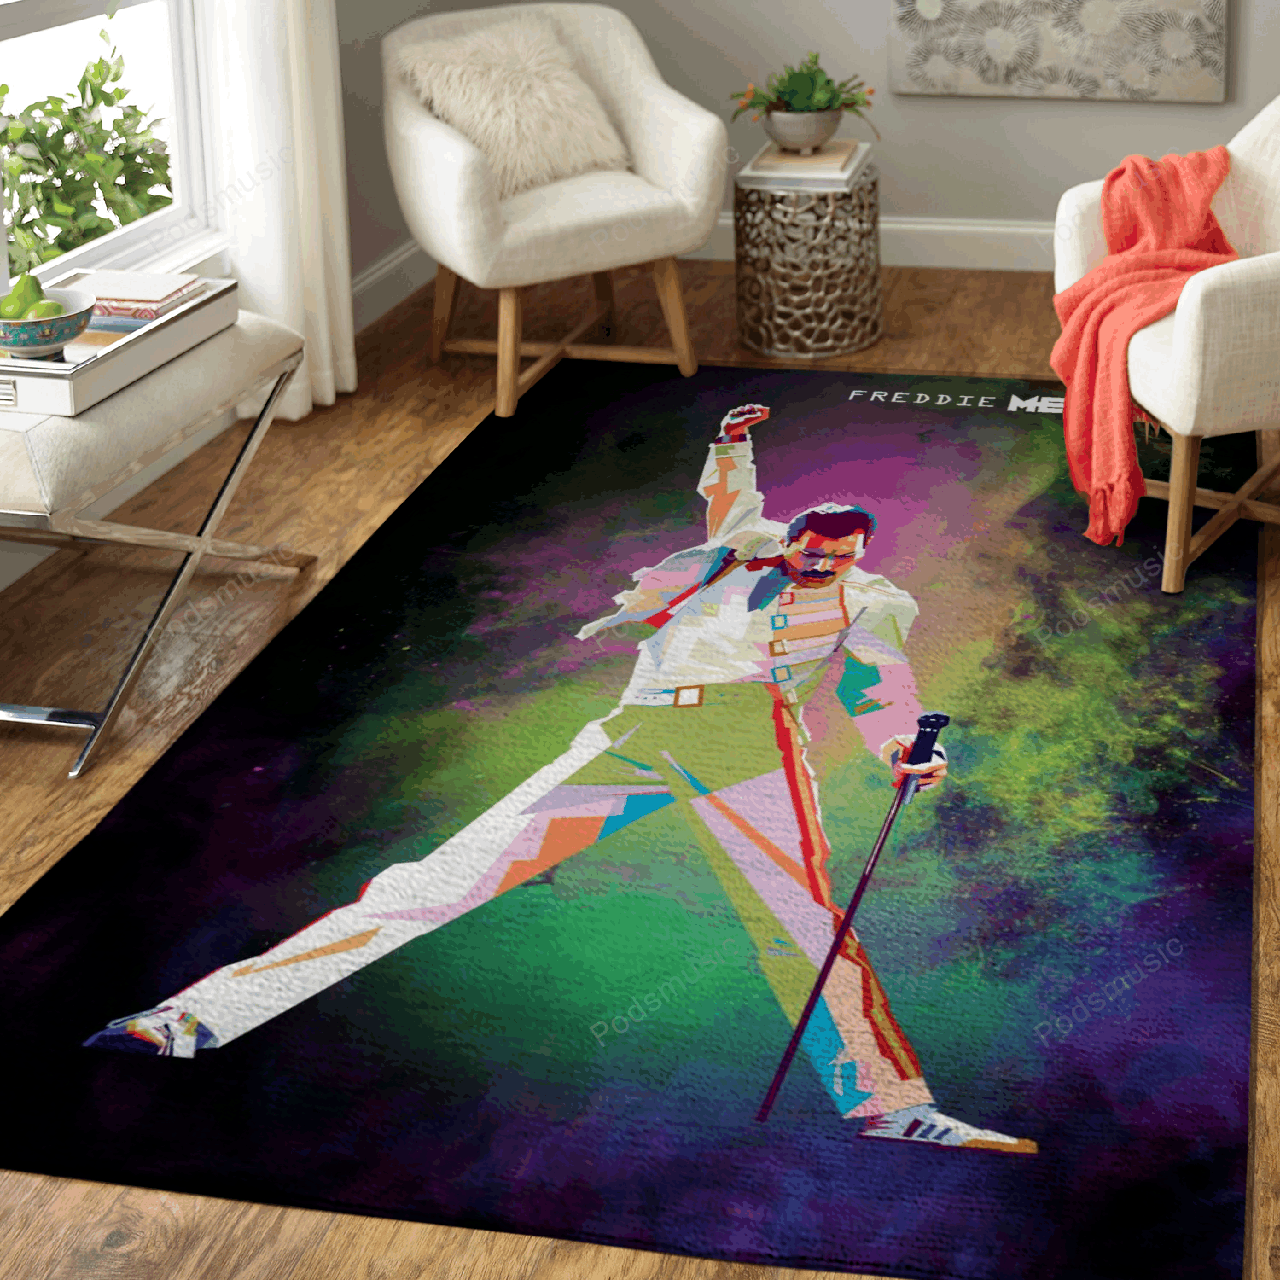 Freddie Mercury – Music Legend Art For Fans Area Rug Carpet